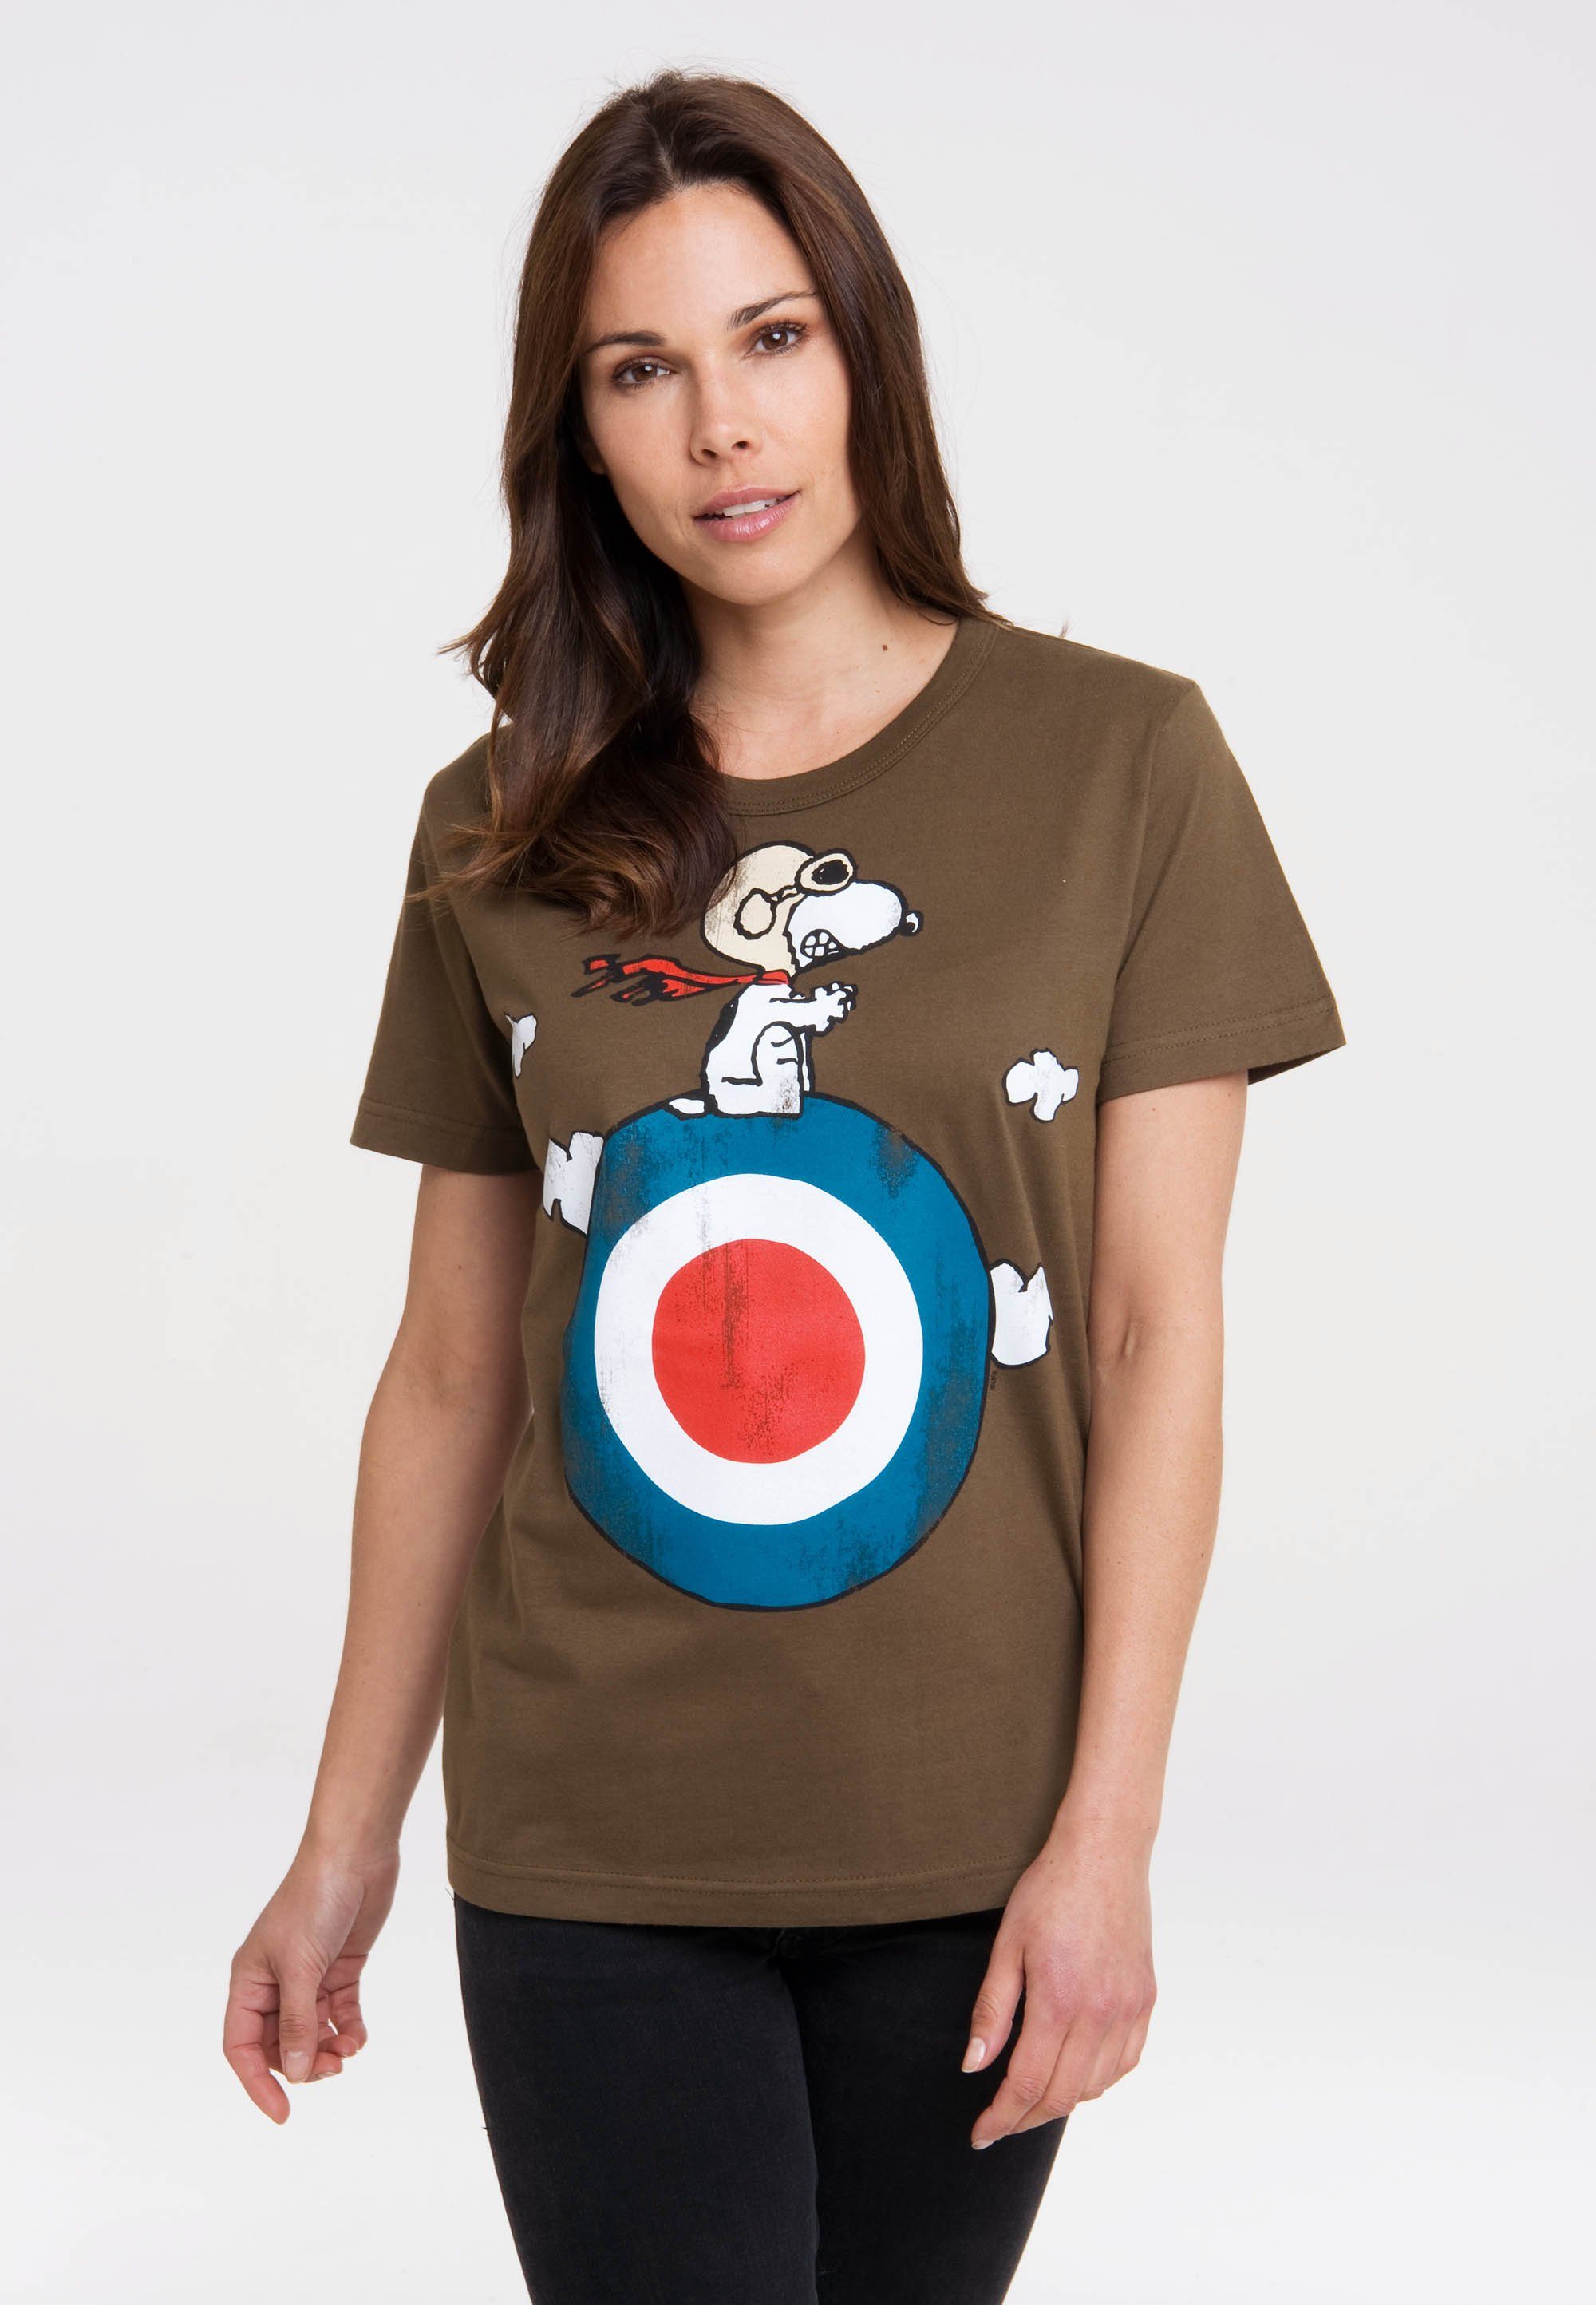 olivgrün-grün - lizenziertem LOGOSHIRT Print T-Shirt Snoopy mit Peanuts